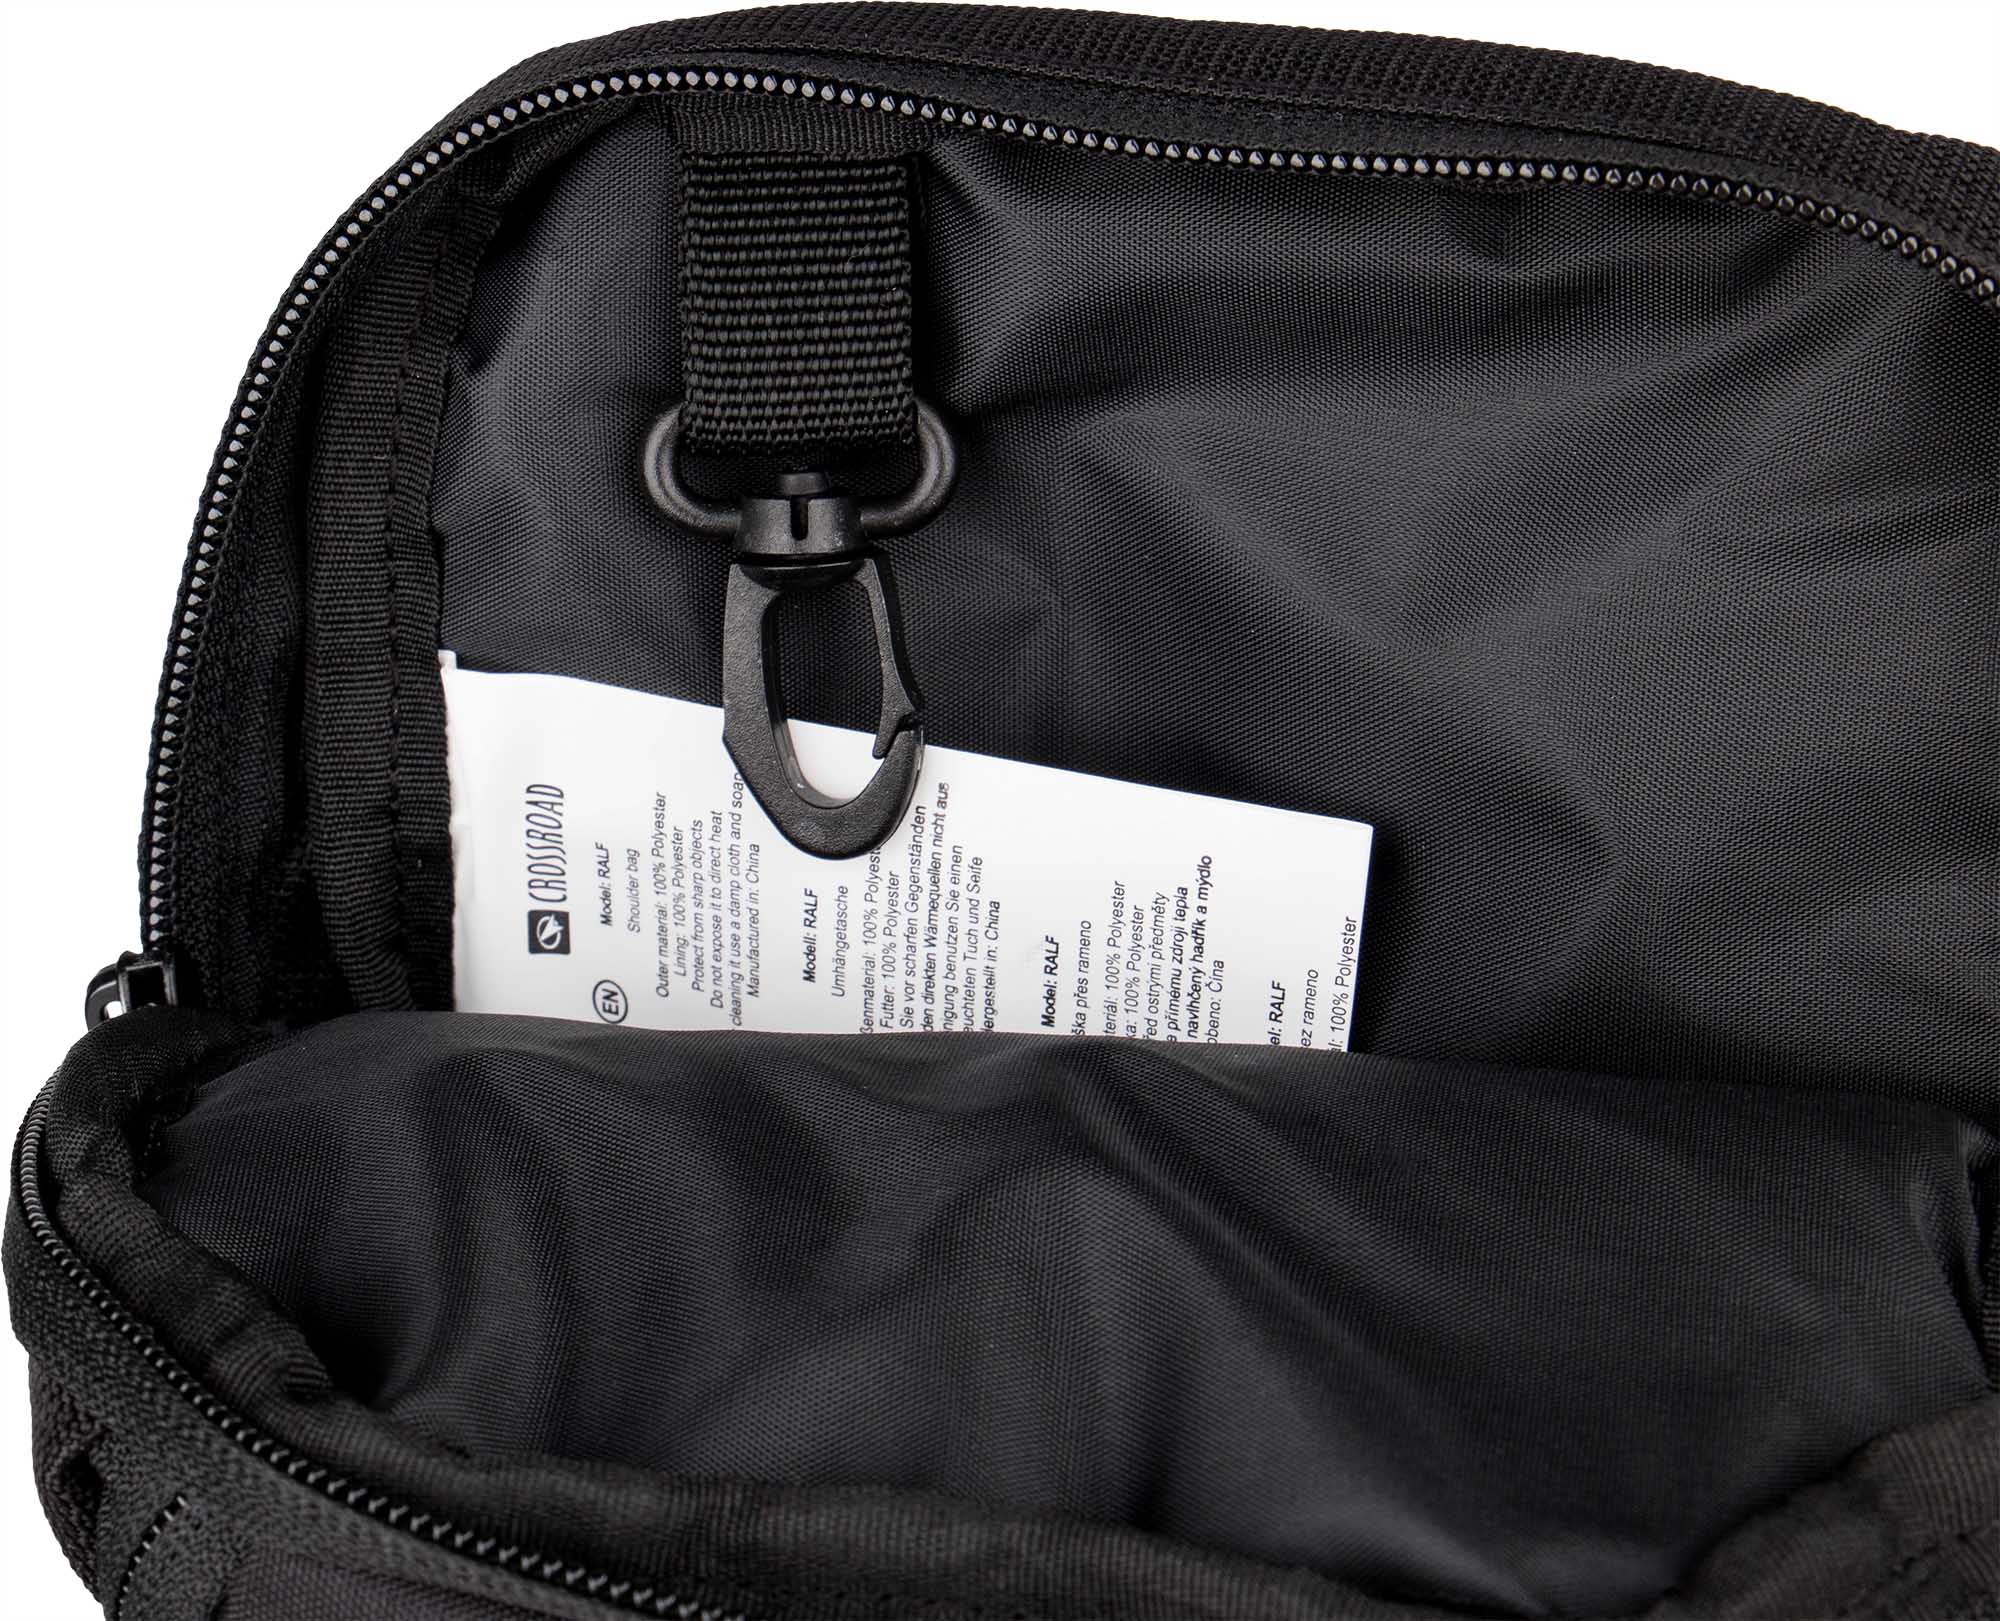 005 black - Travel document bag